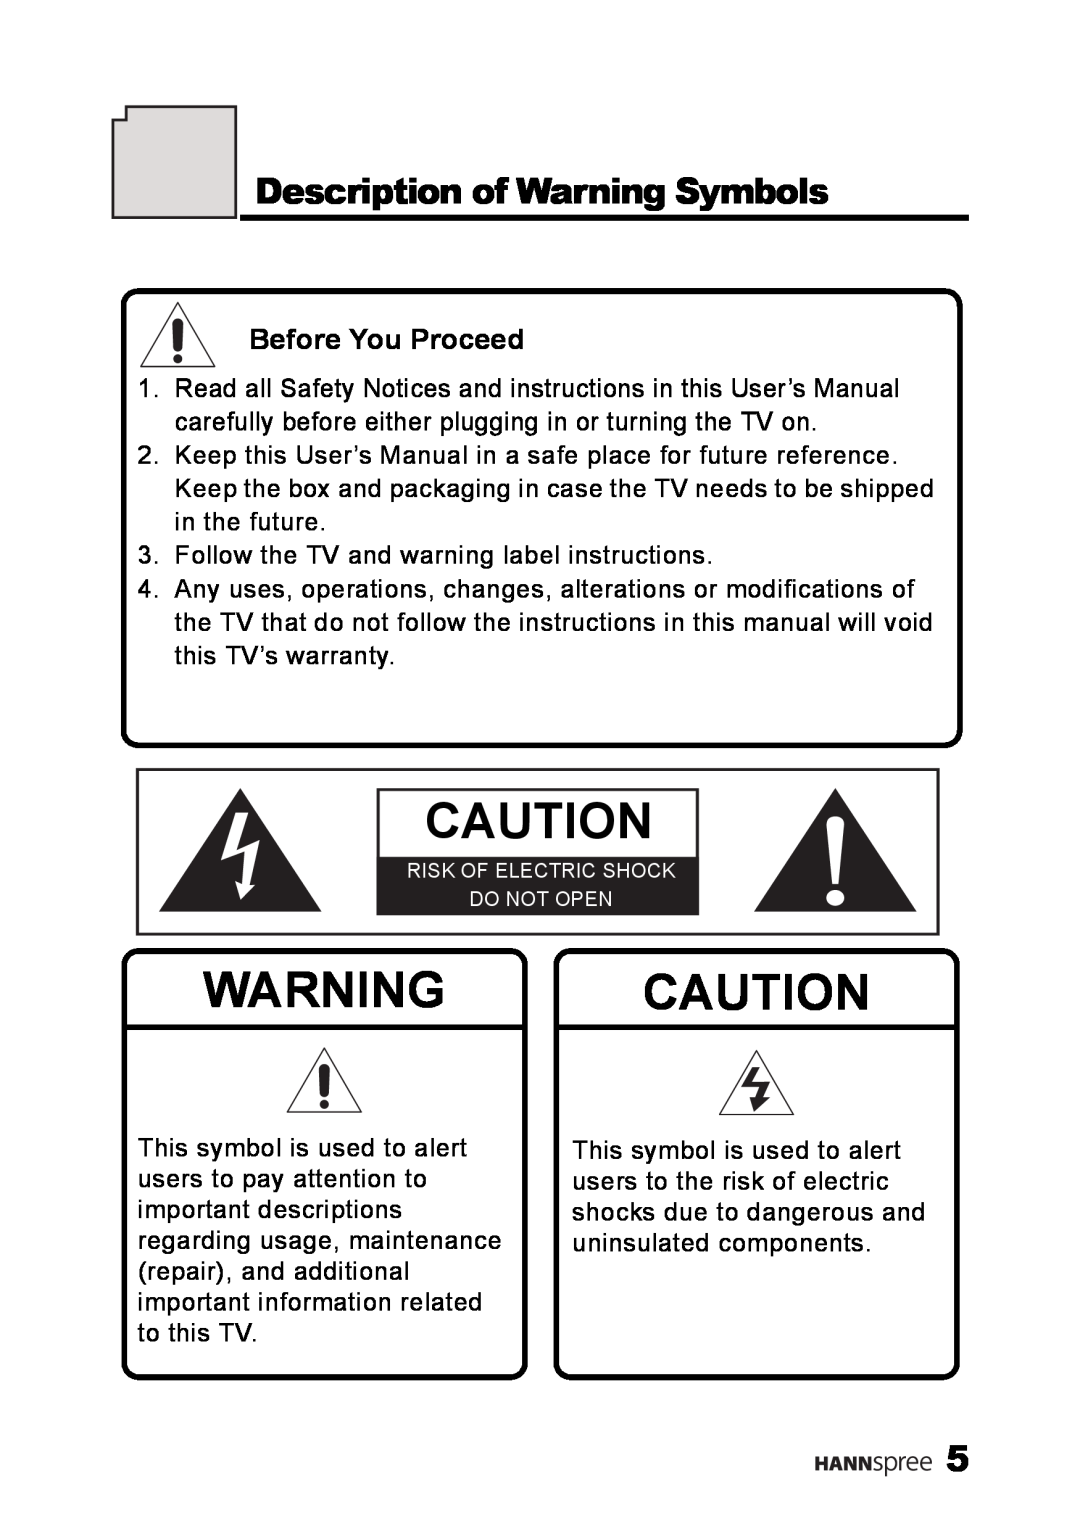 HANNspree MAK-000039 manual Warning Caution, Before You Proceed, Description of Warning Symbols 